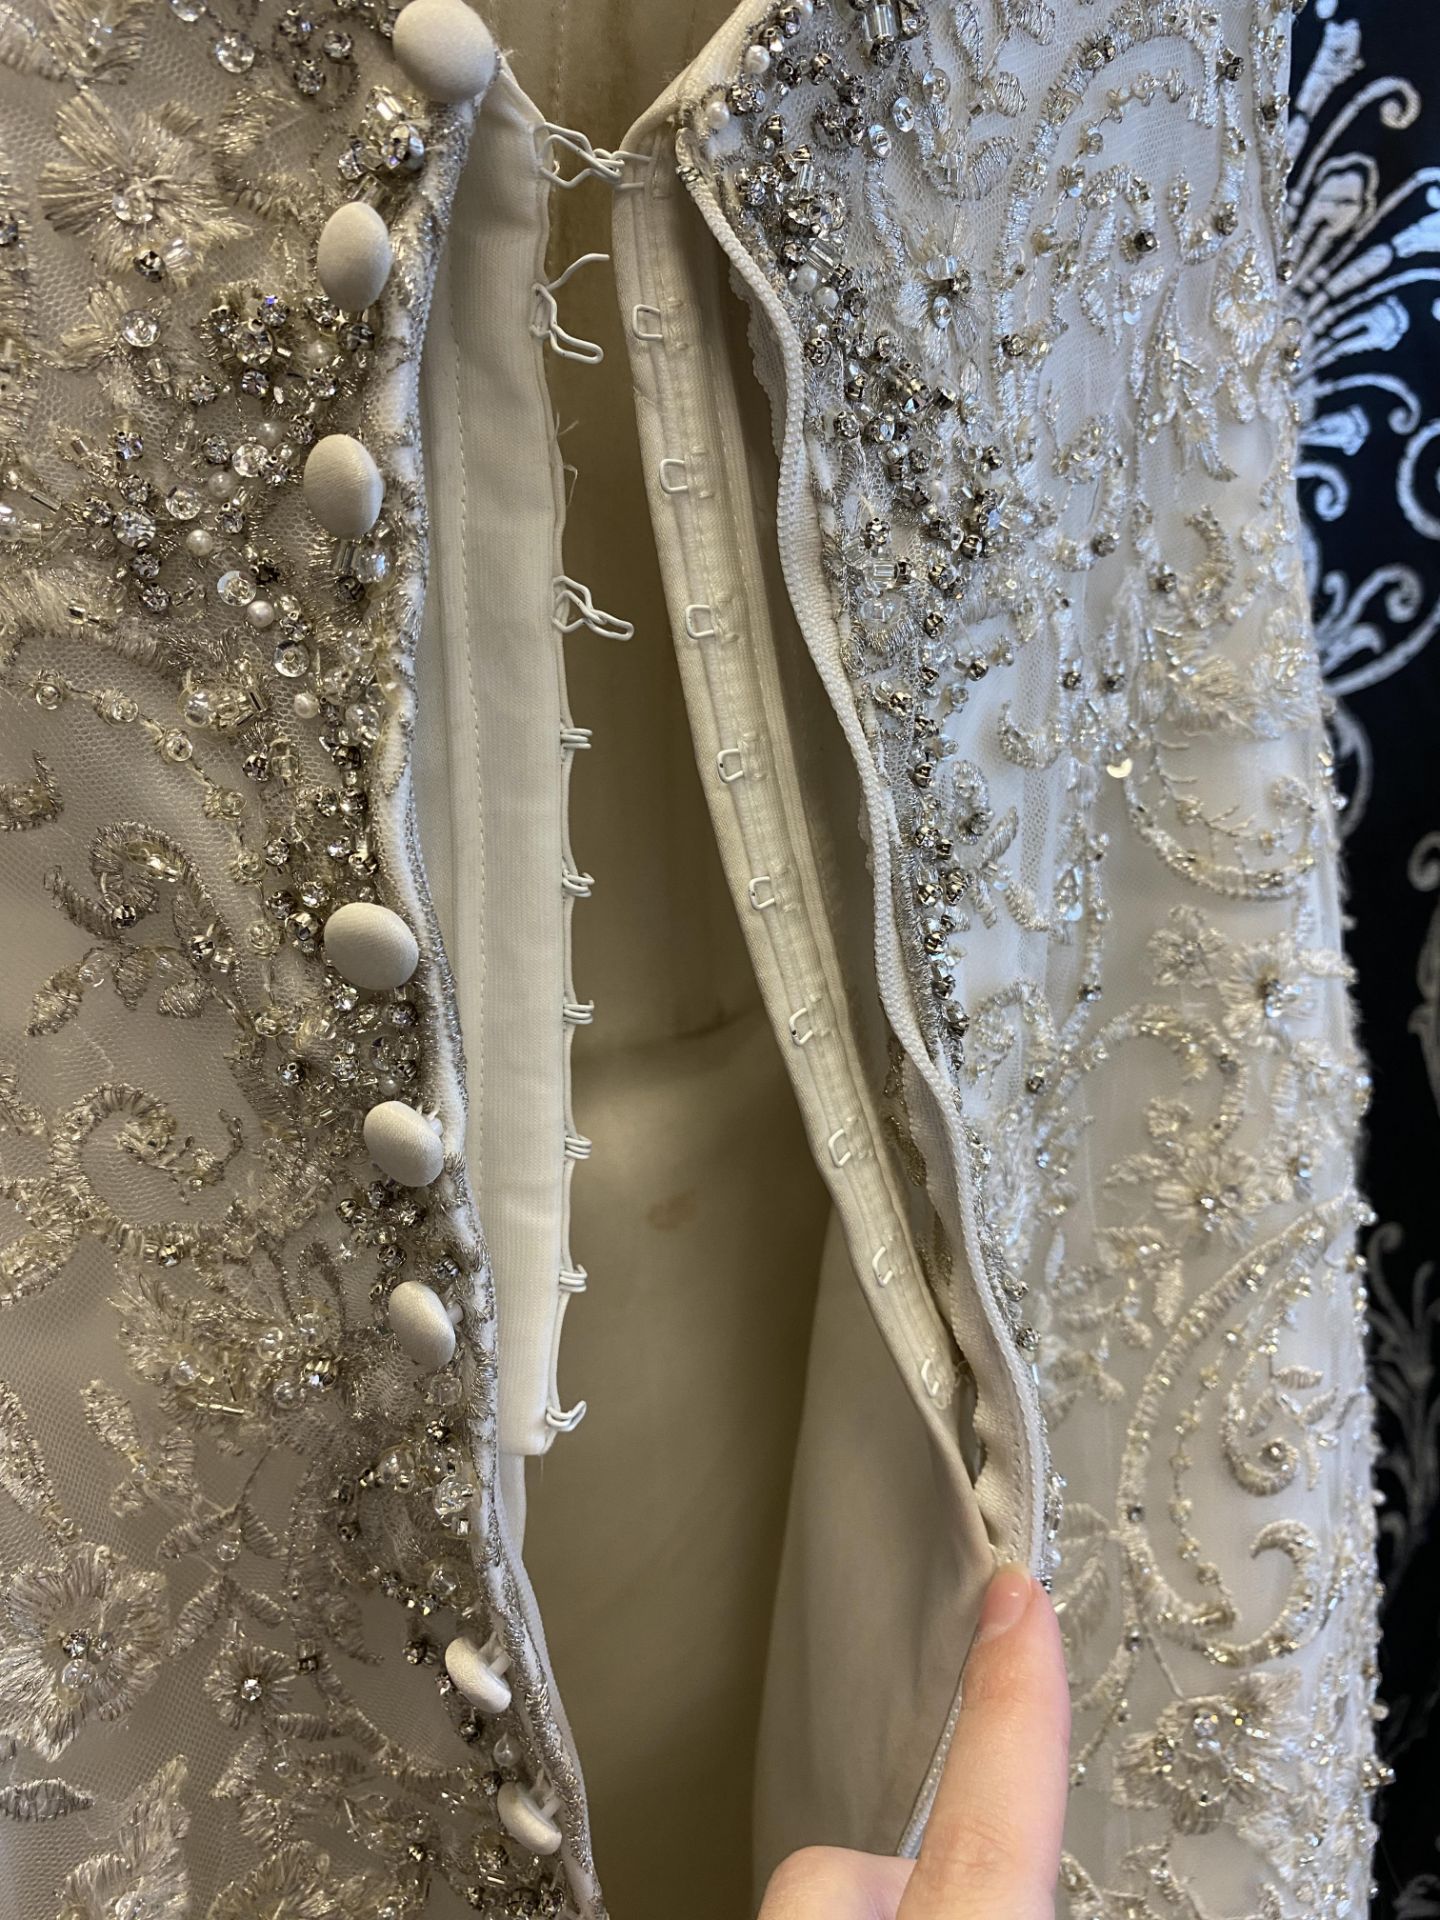 1 x ALLURE '9275' Timeless Strapless Lace And Chiffon Mermaid Designer Wedding Dress RRP £2,250 UK12 - Image 4 of 11